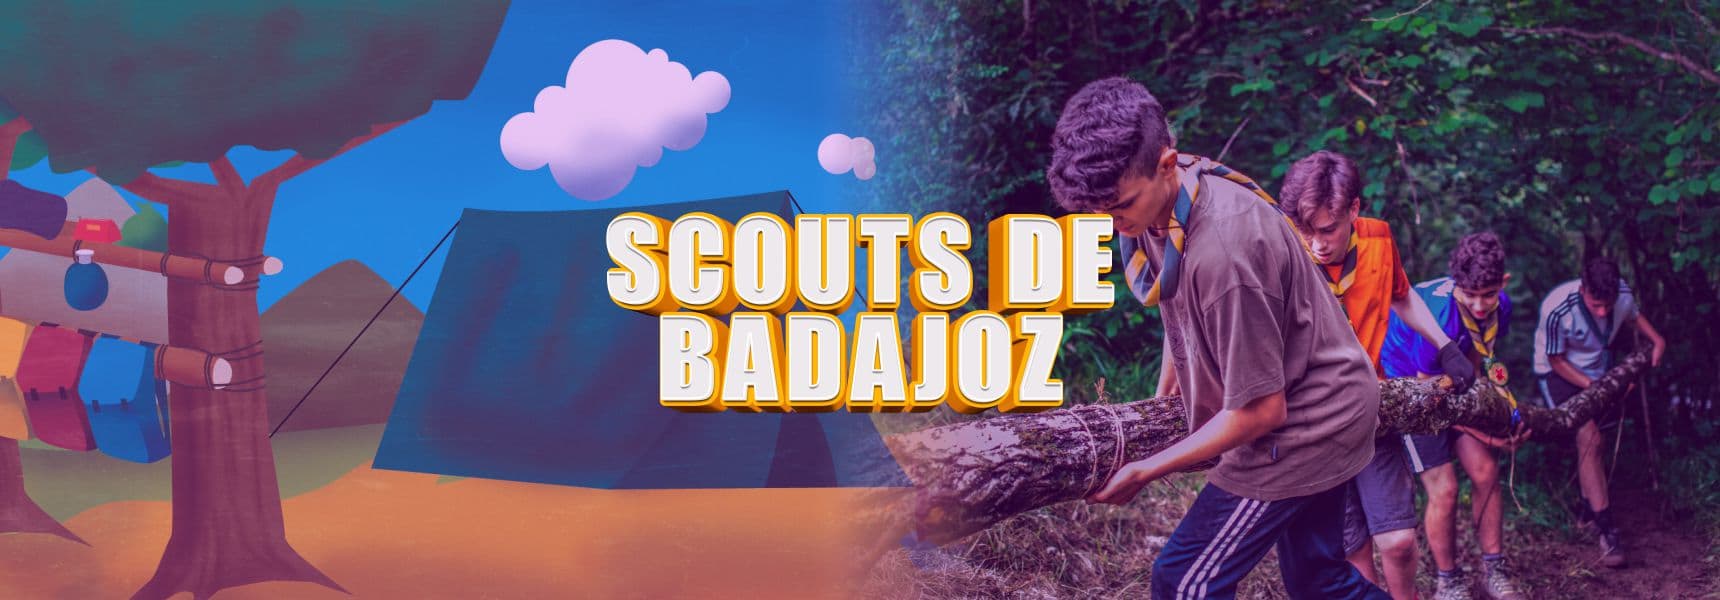 scouts-badajoz-titulo-cabecera